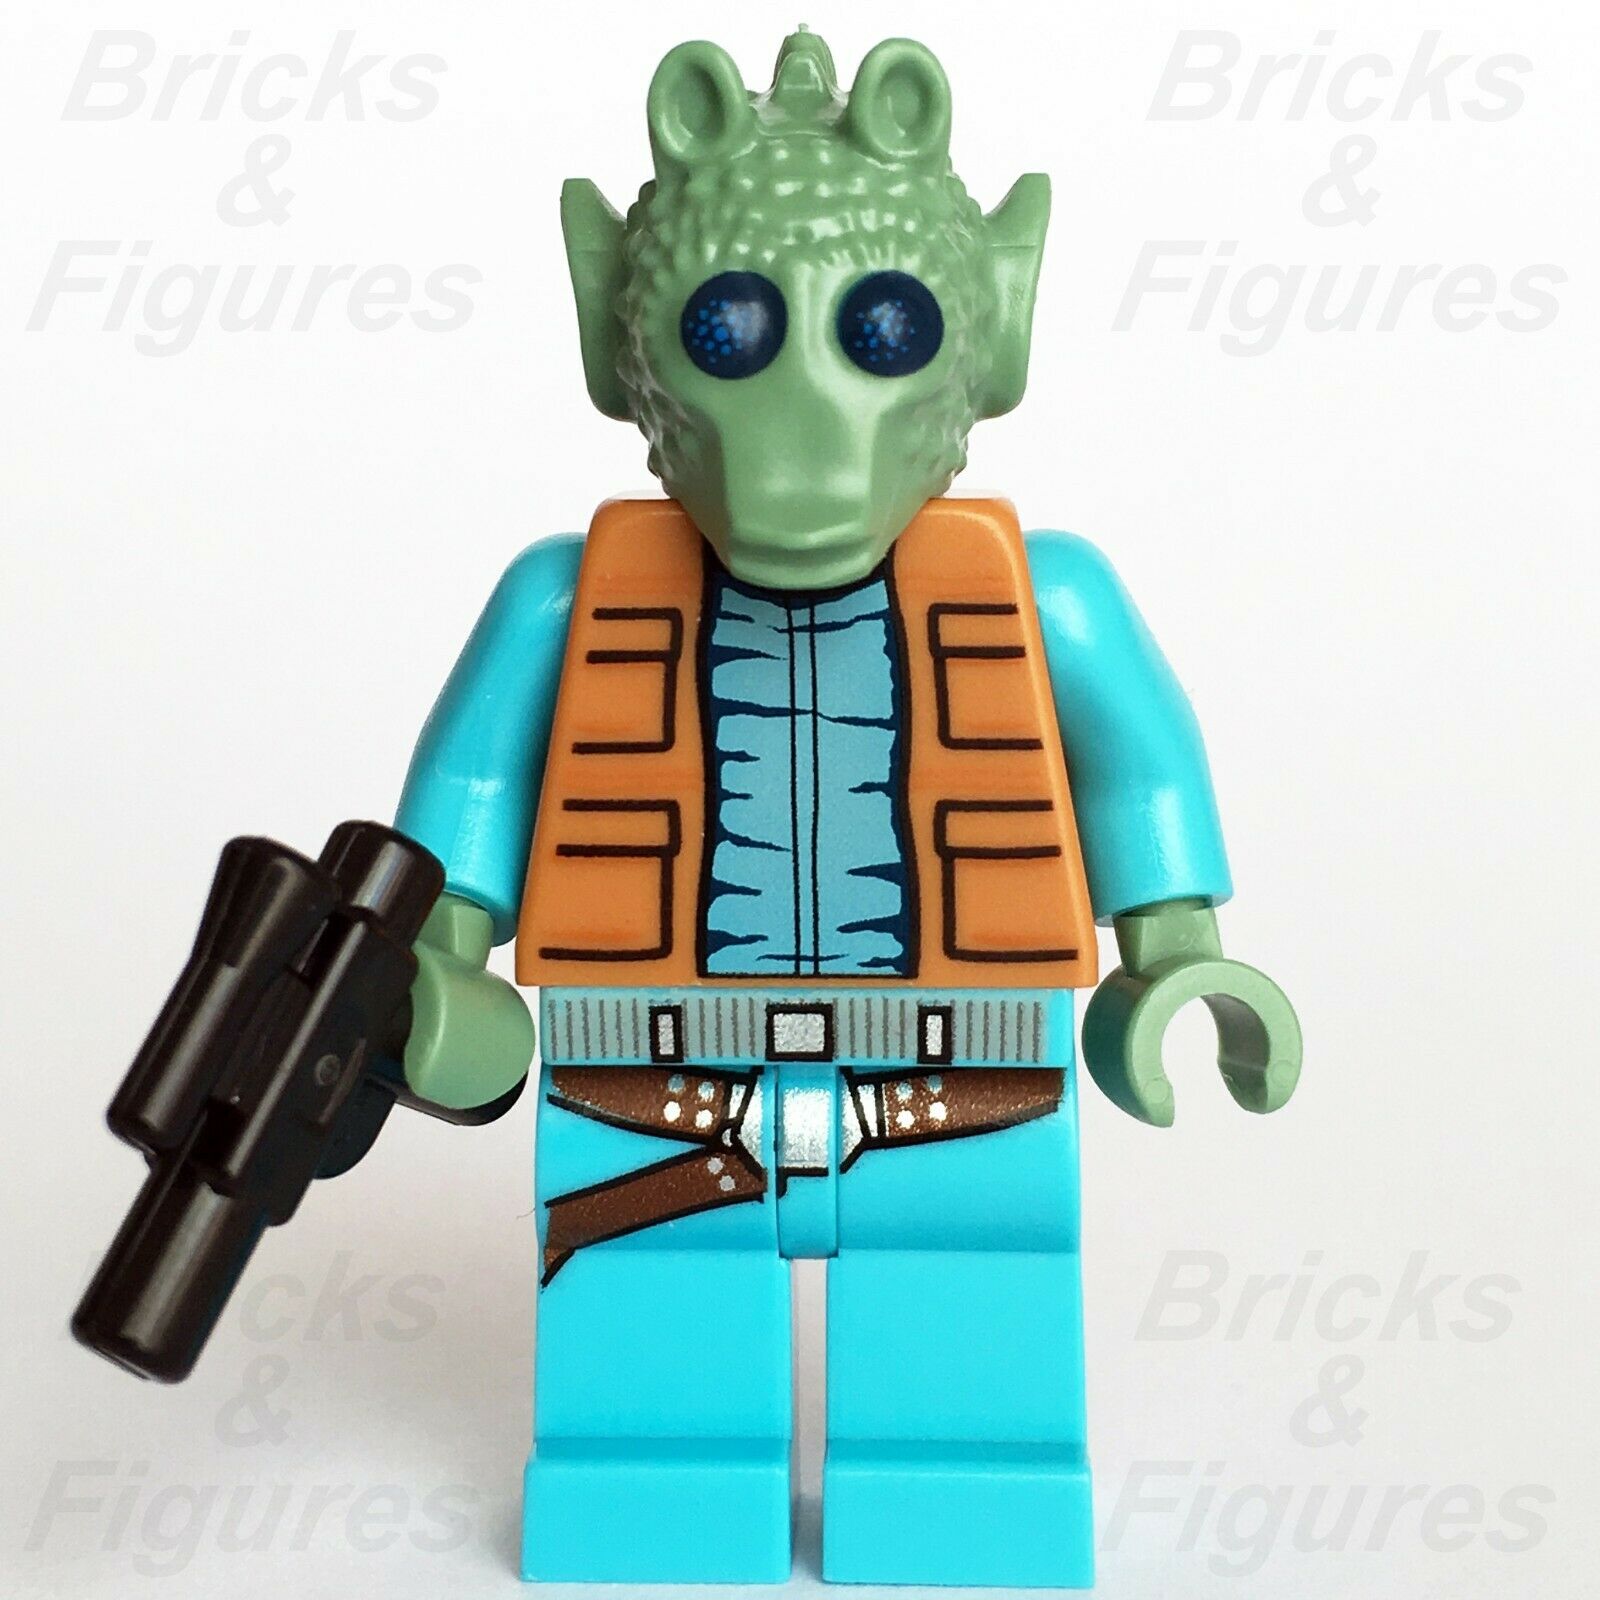 New Star Wars LEGO Greedo Rodian Bounty Hunter Tatooine Minifigure 75052 - Bricks & Figures